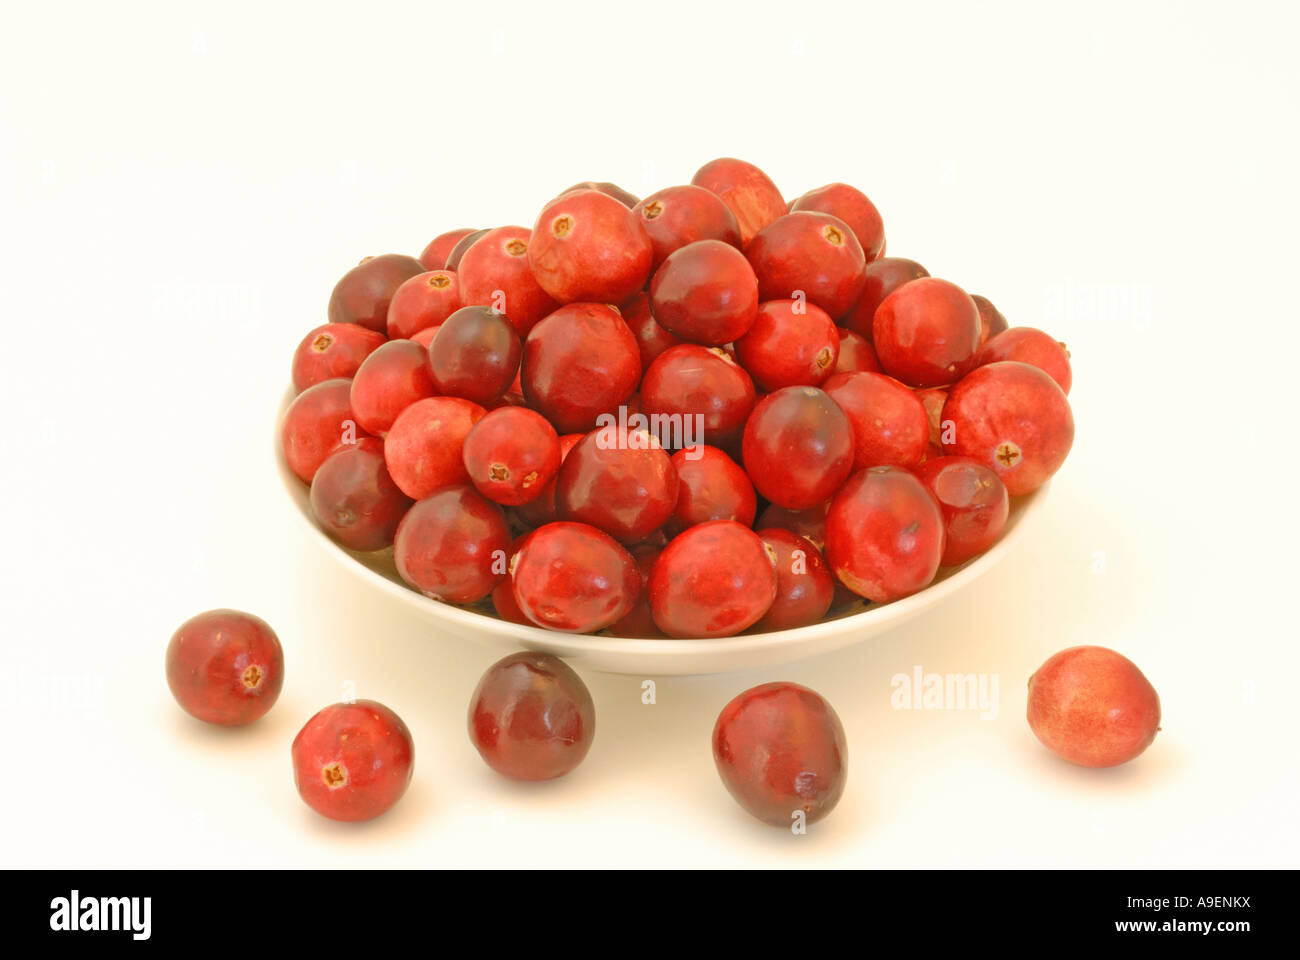 American Cranberry (Vaccinium macrocarpon, Oxycoccus macrocarpus), berries in a bowl studio picture Stock Photo